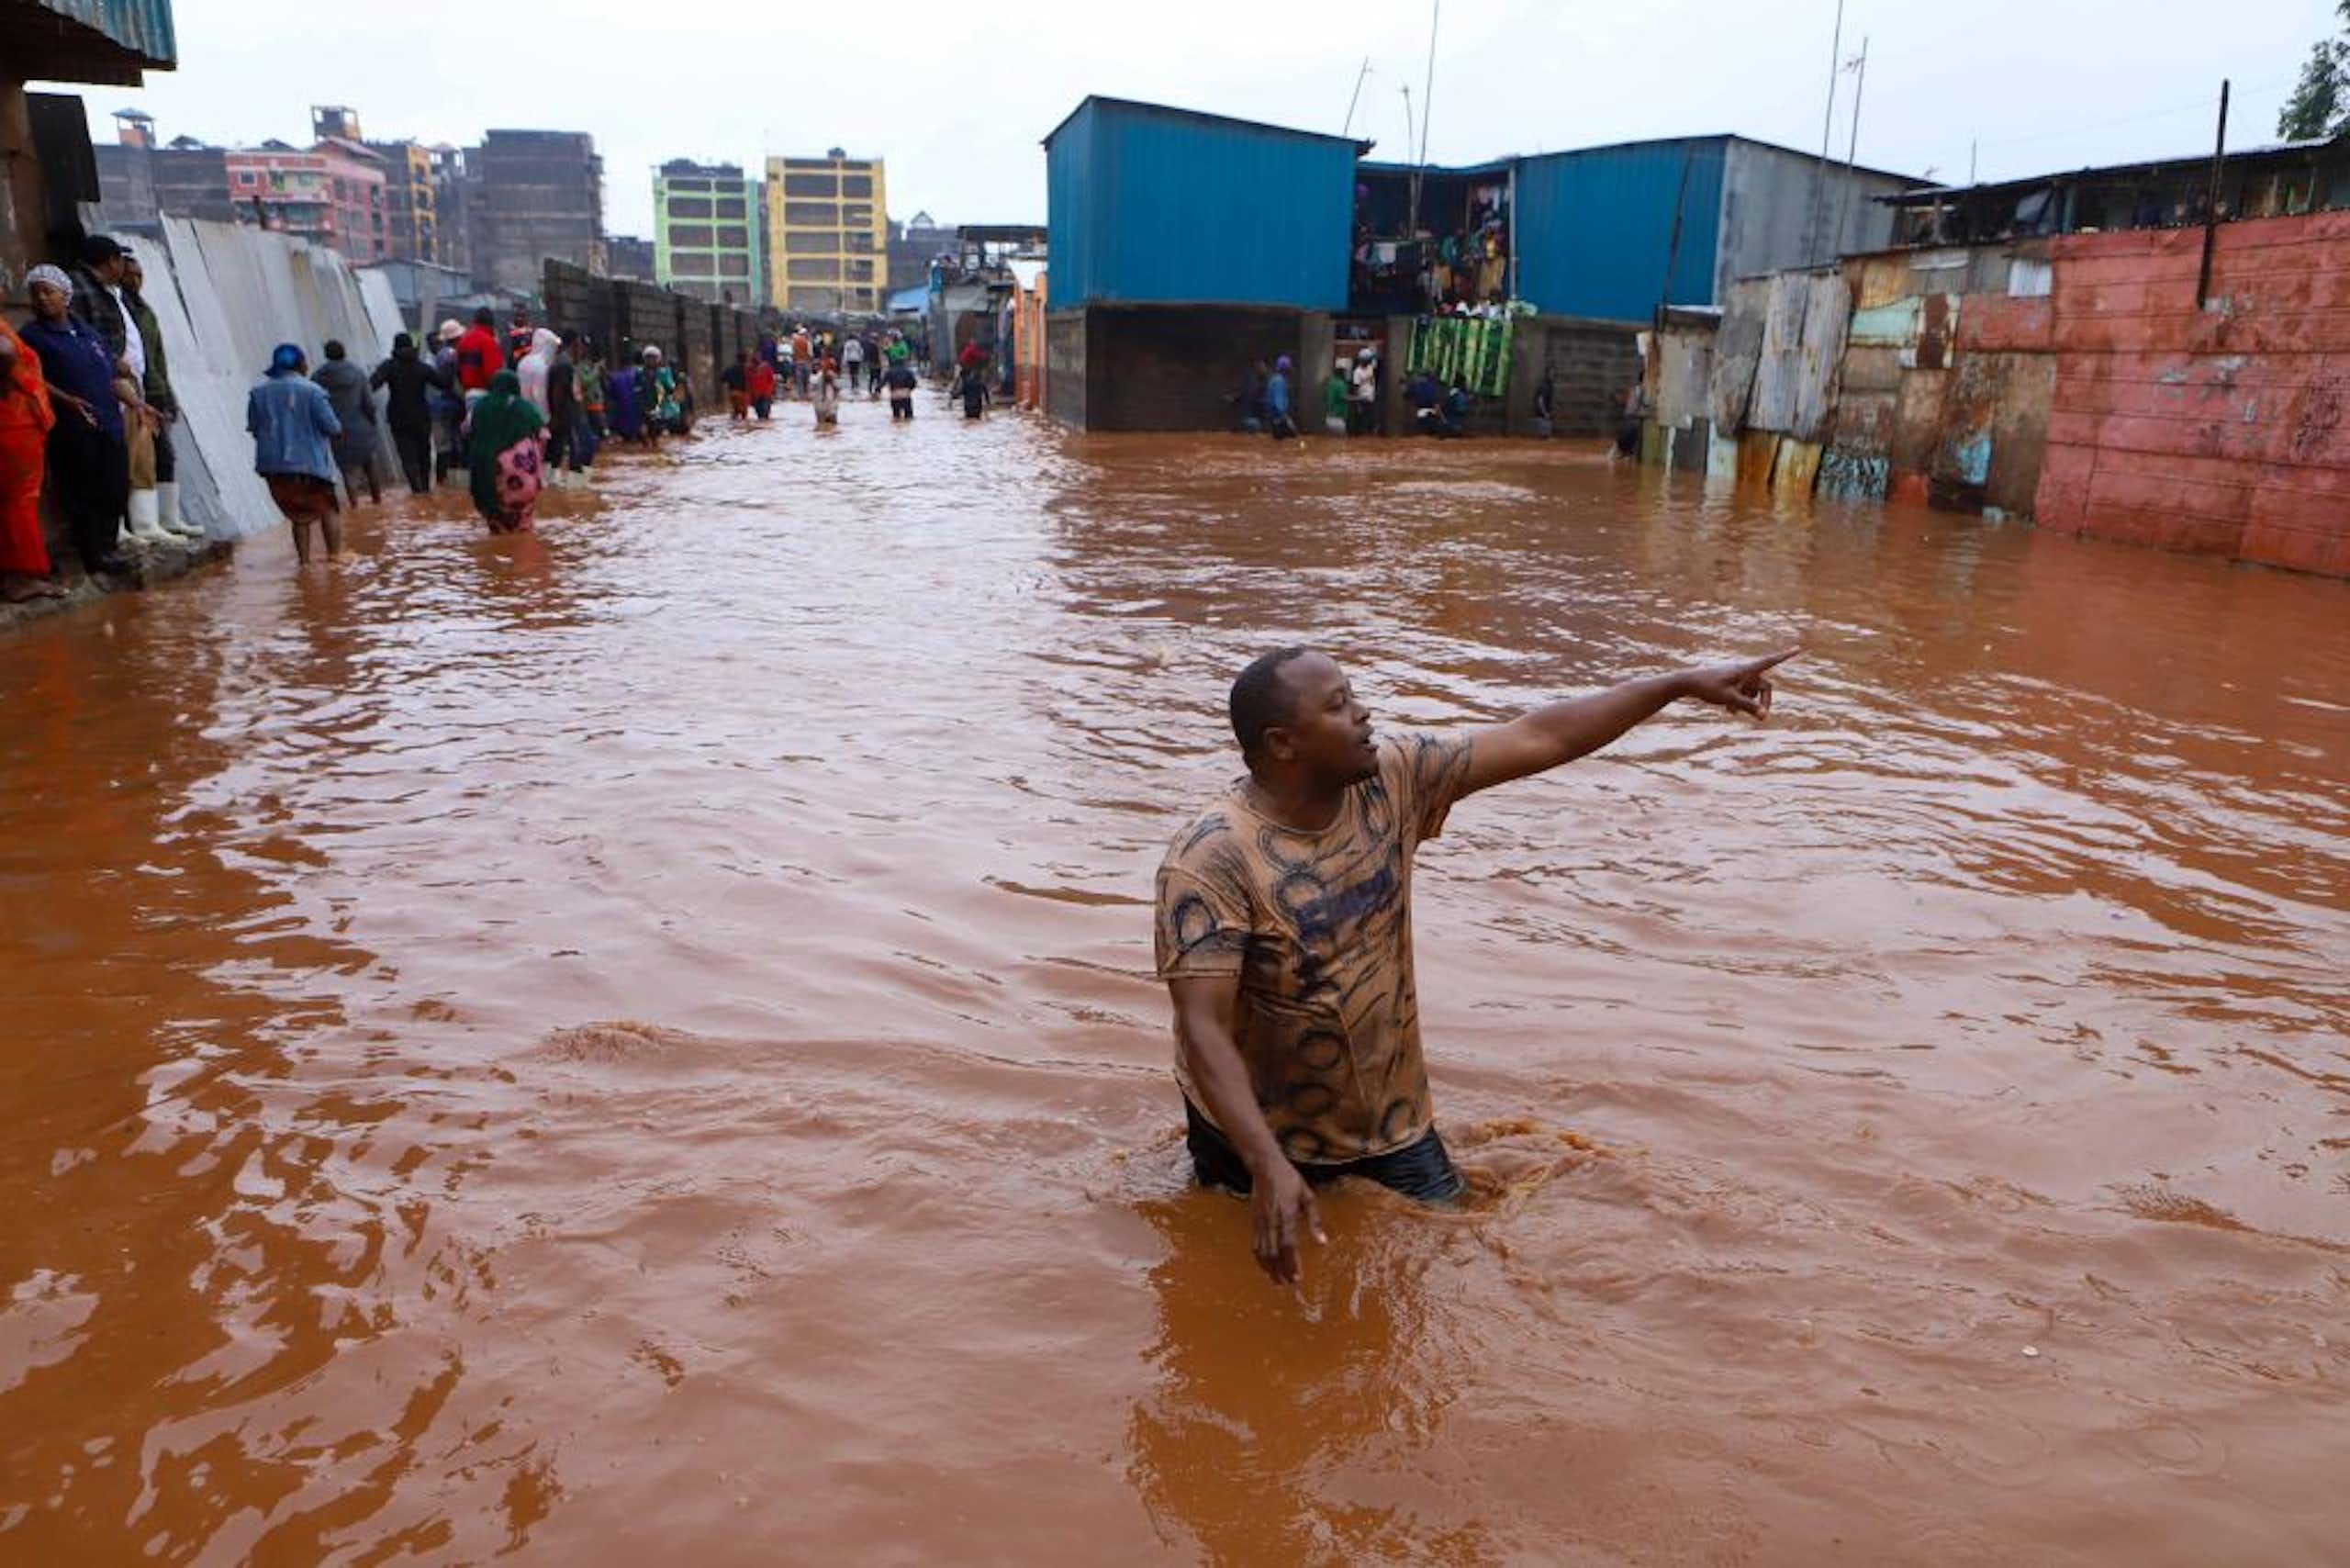 Kenya’s devastating floods expose decades of poor urban planning and bad land management